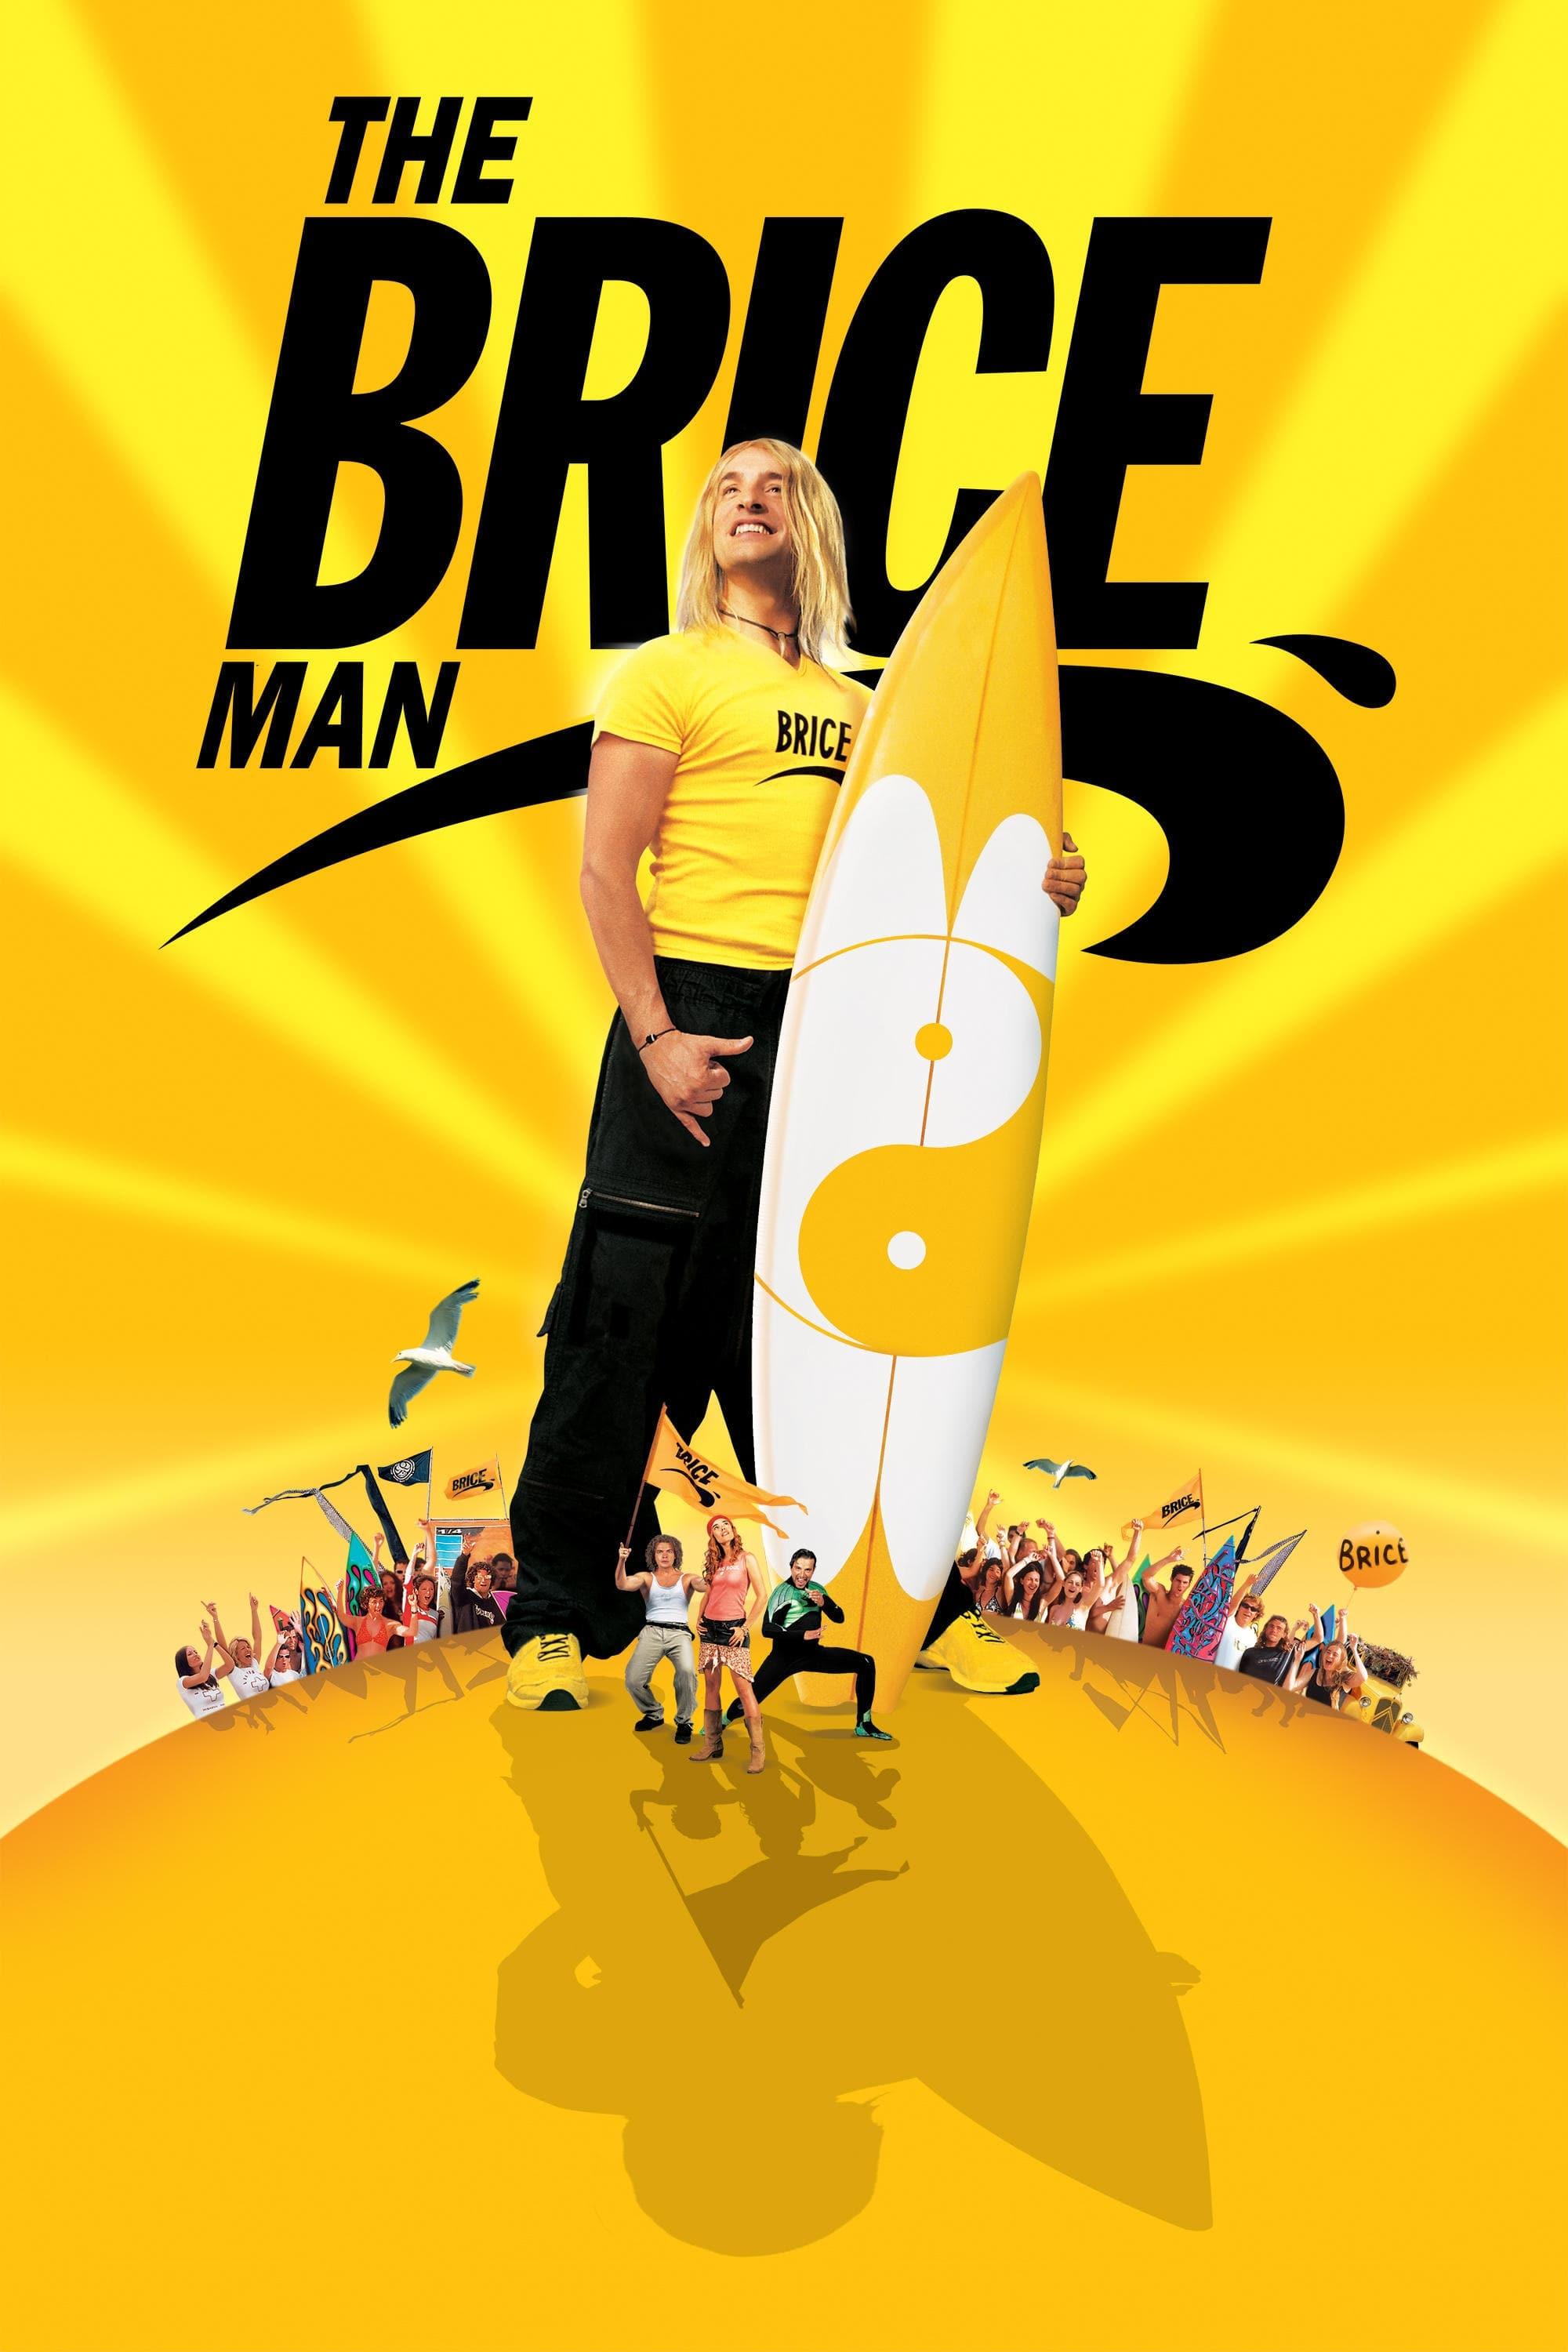 The Brice Man poster